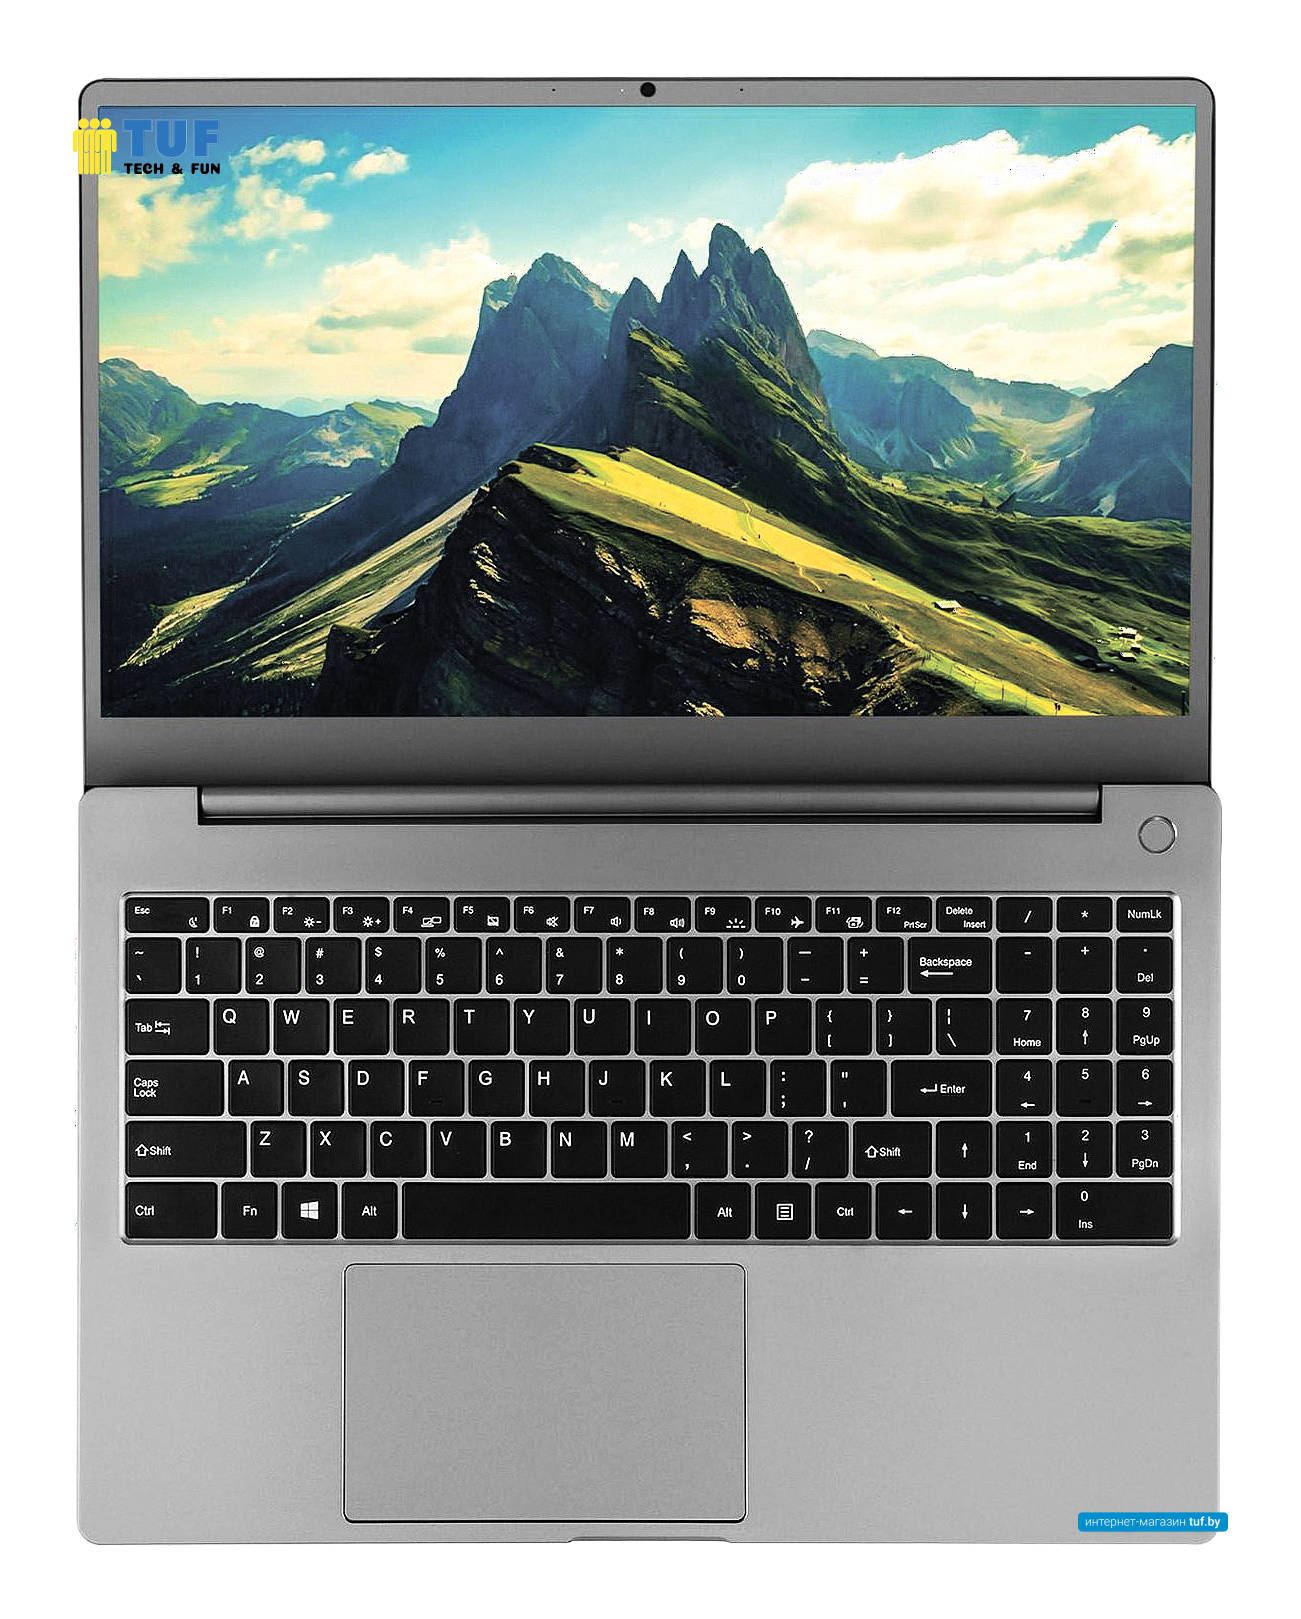 Ноутбук Rombica myBook Zenith PCLT-0027